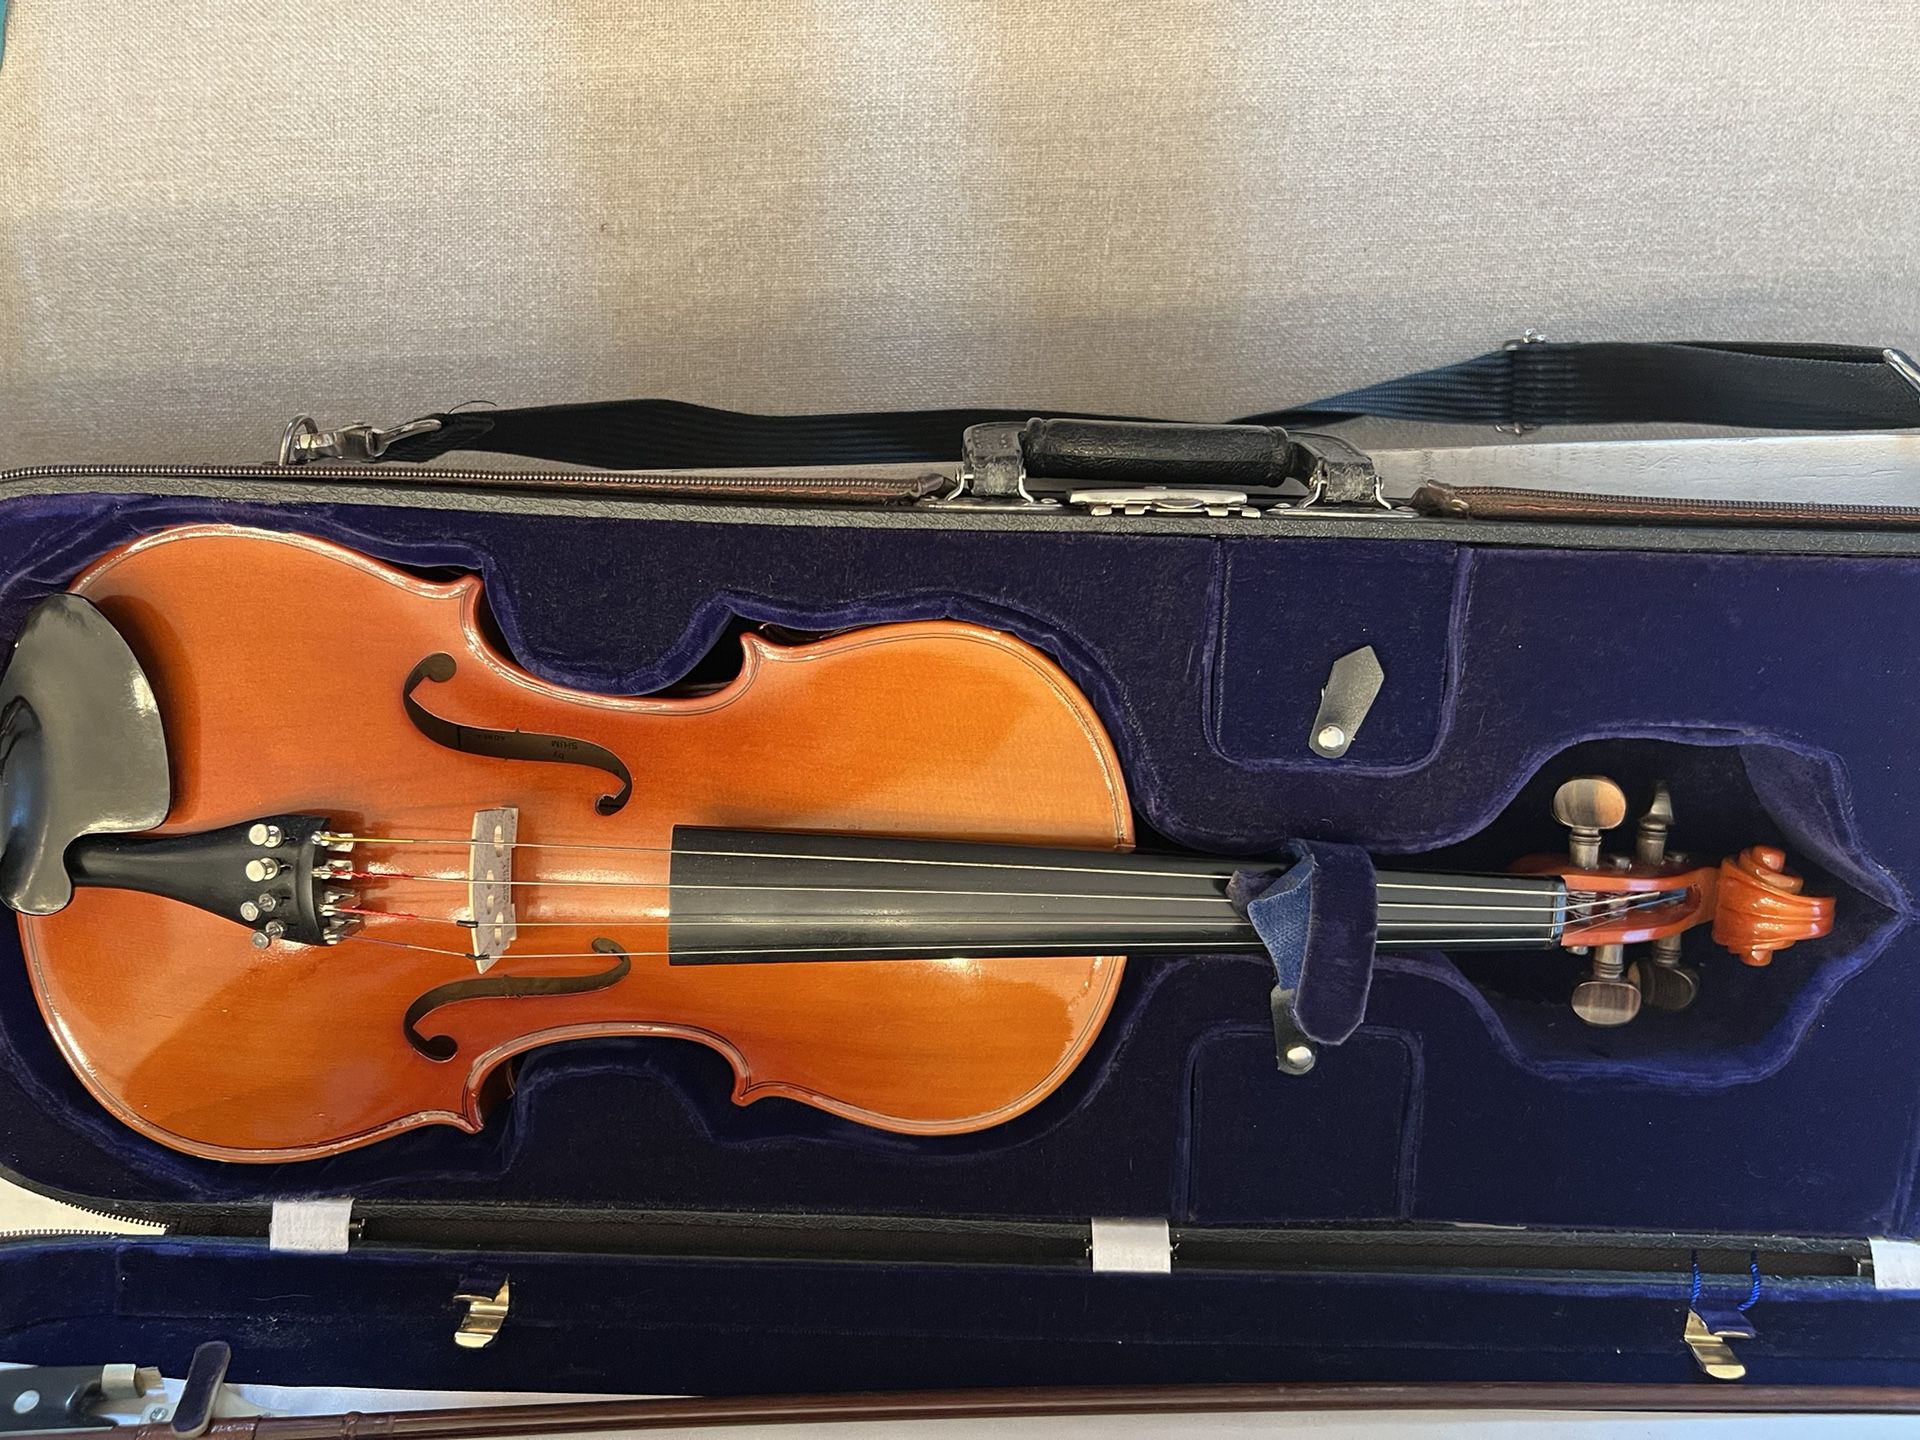 Full Size Student Violin